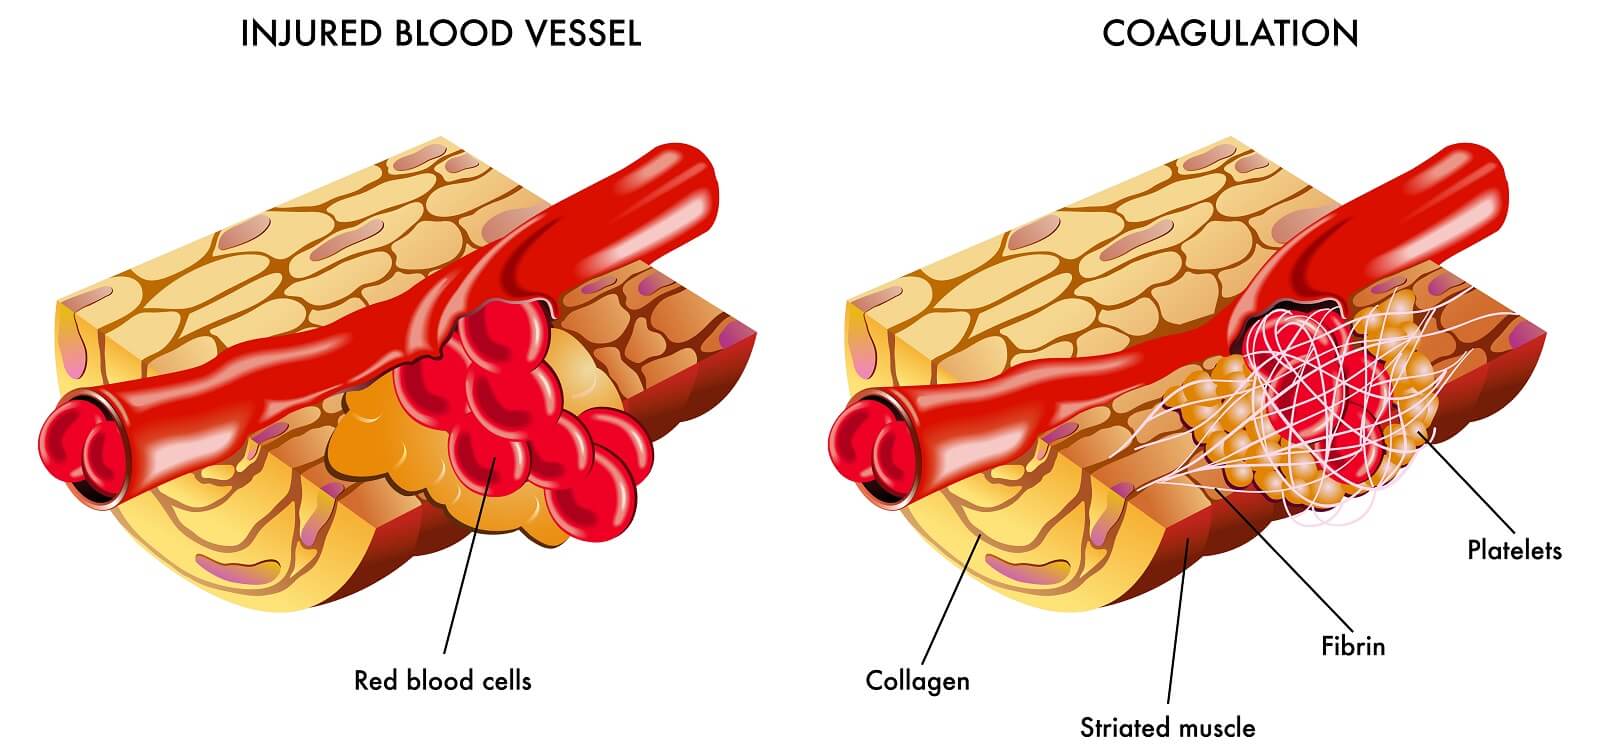 Diagram of injured blood vessel and fibrin assisting in blood coagulation.